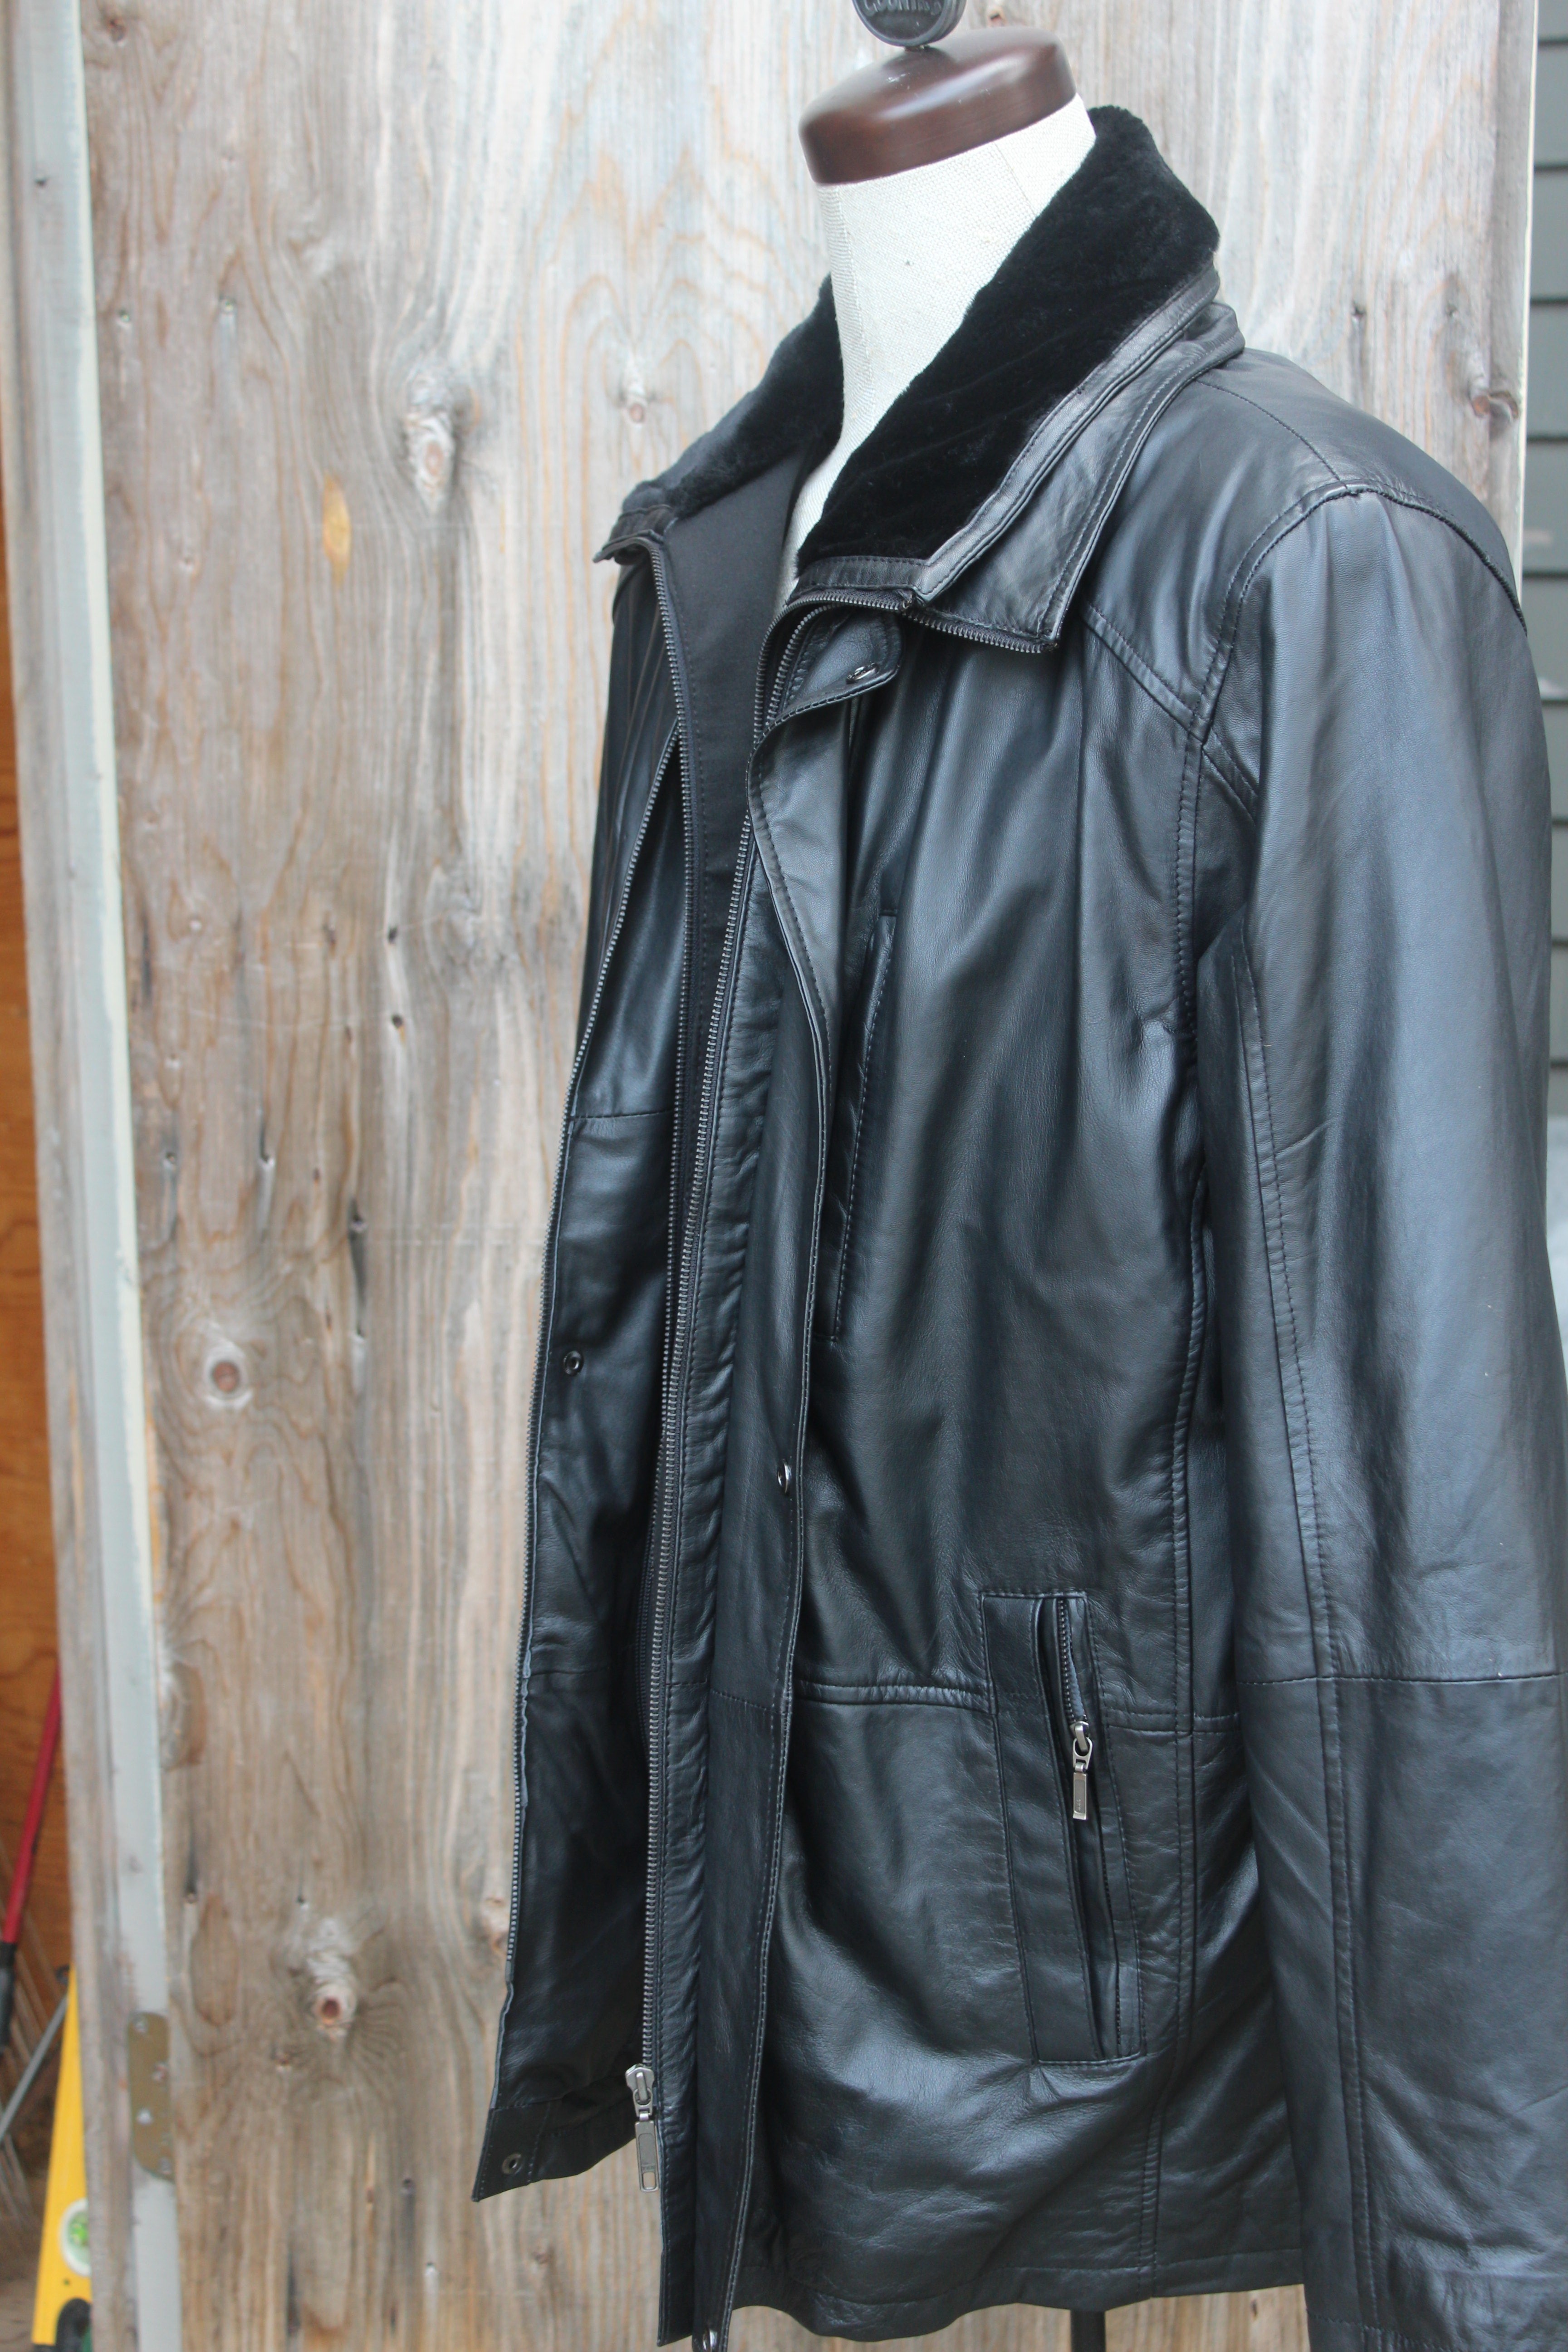 Black Leather & Fur Collar- $495.00
Plonge Leathers
Style #: 40655BK
